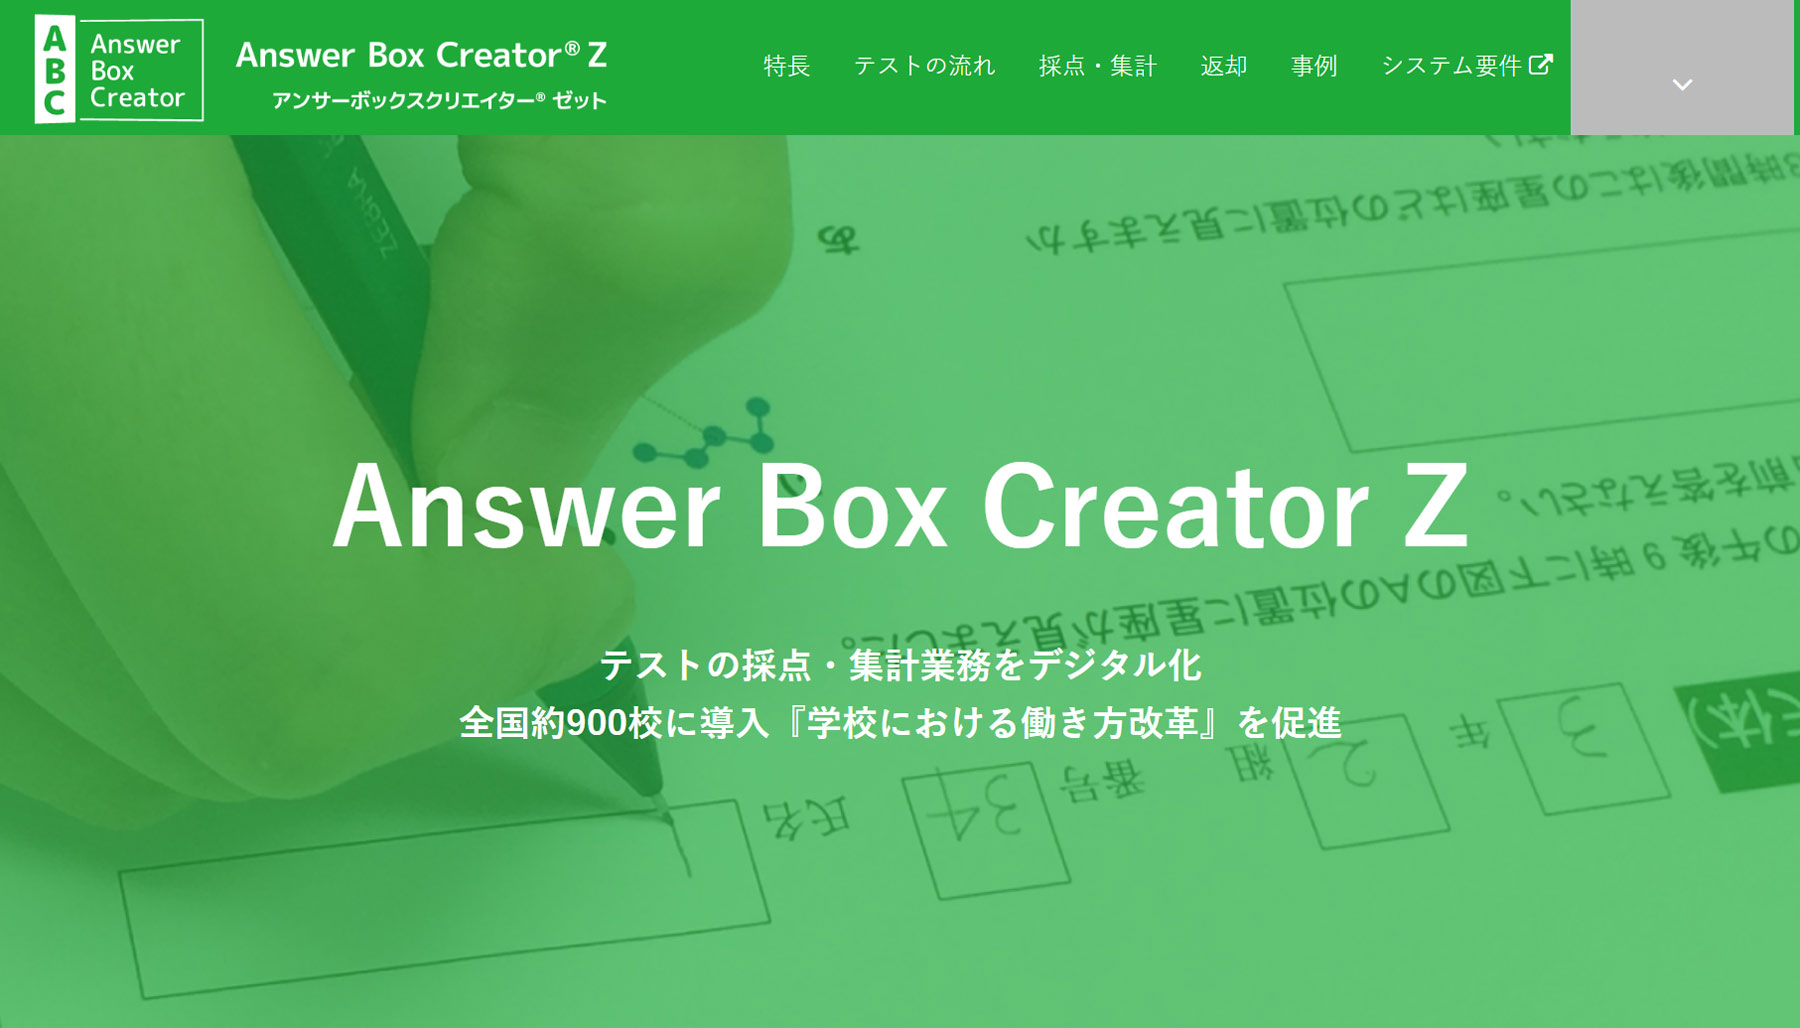 Answer Box Creator Z公式Webサイト